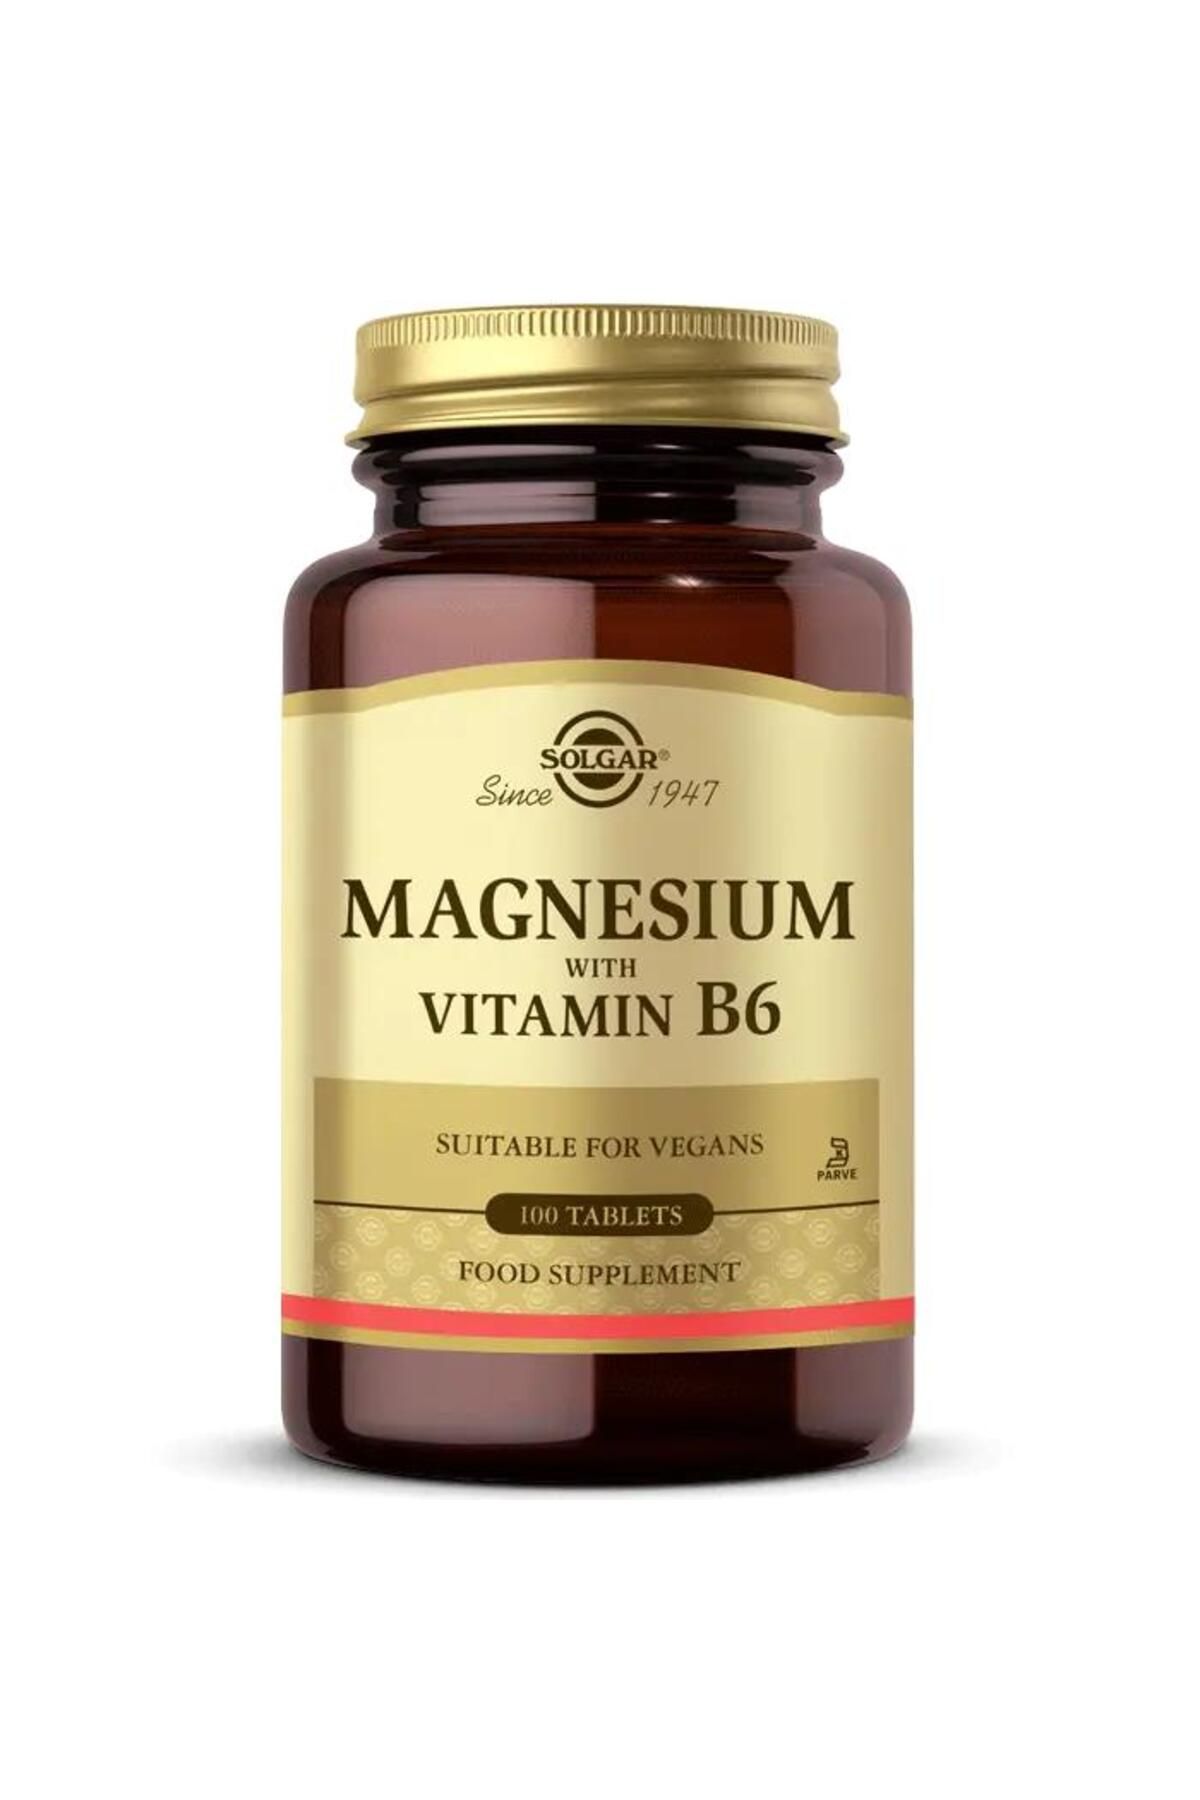 Solgar Magnesium With Vitamin B6 100 Tablet